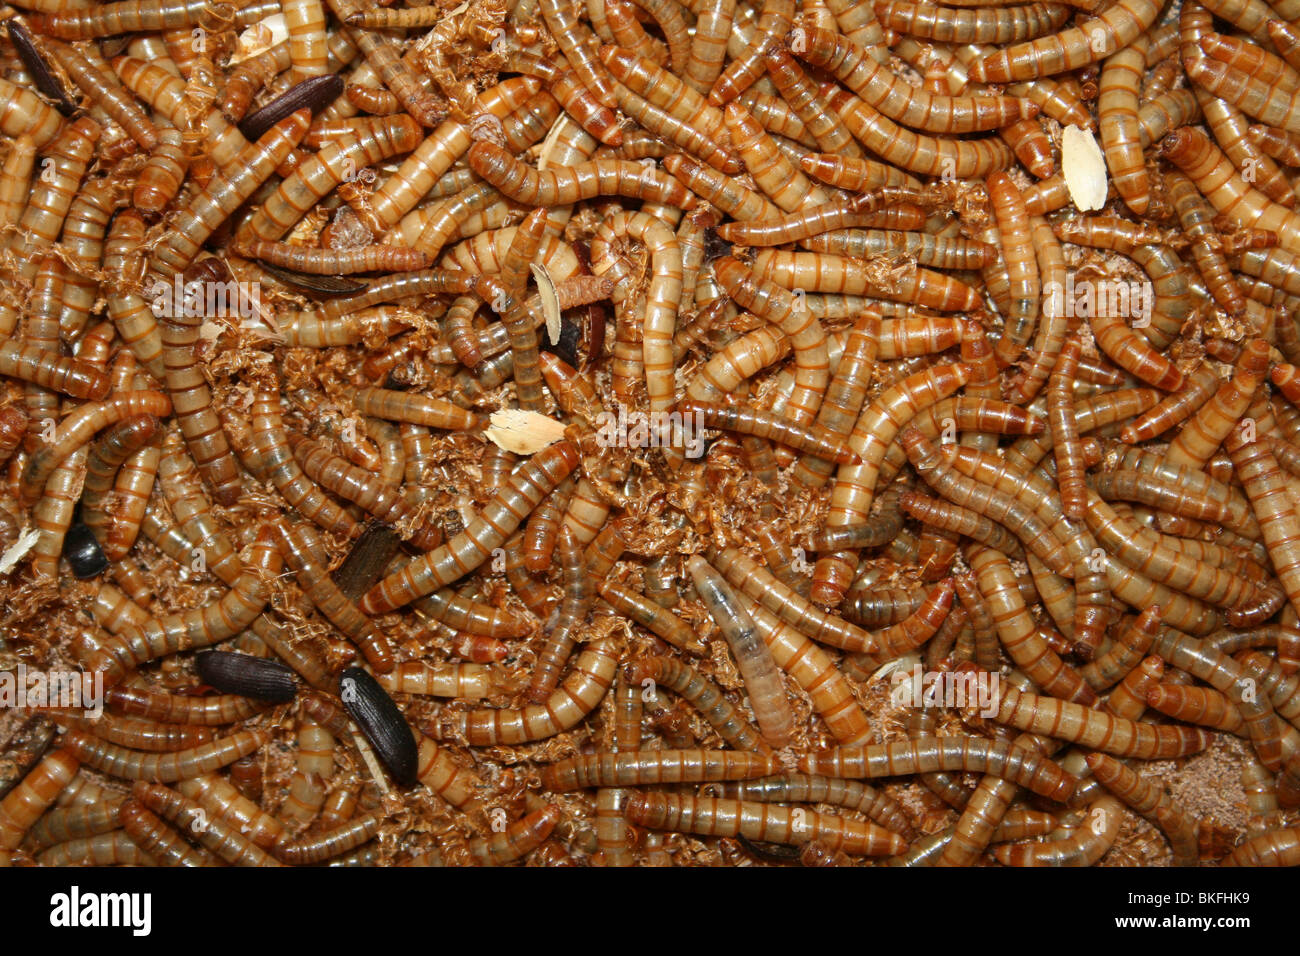 Mealworms, larve del coleottero Mealworm Tenebrio molitor Foto Stock